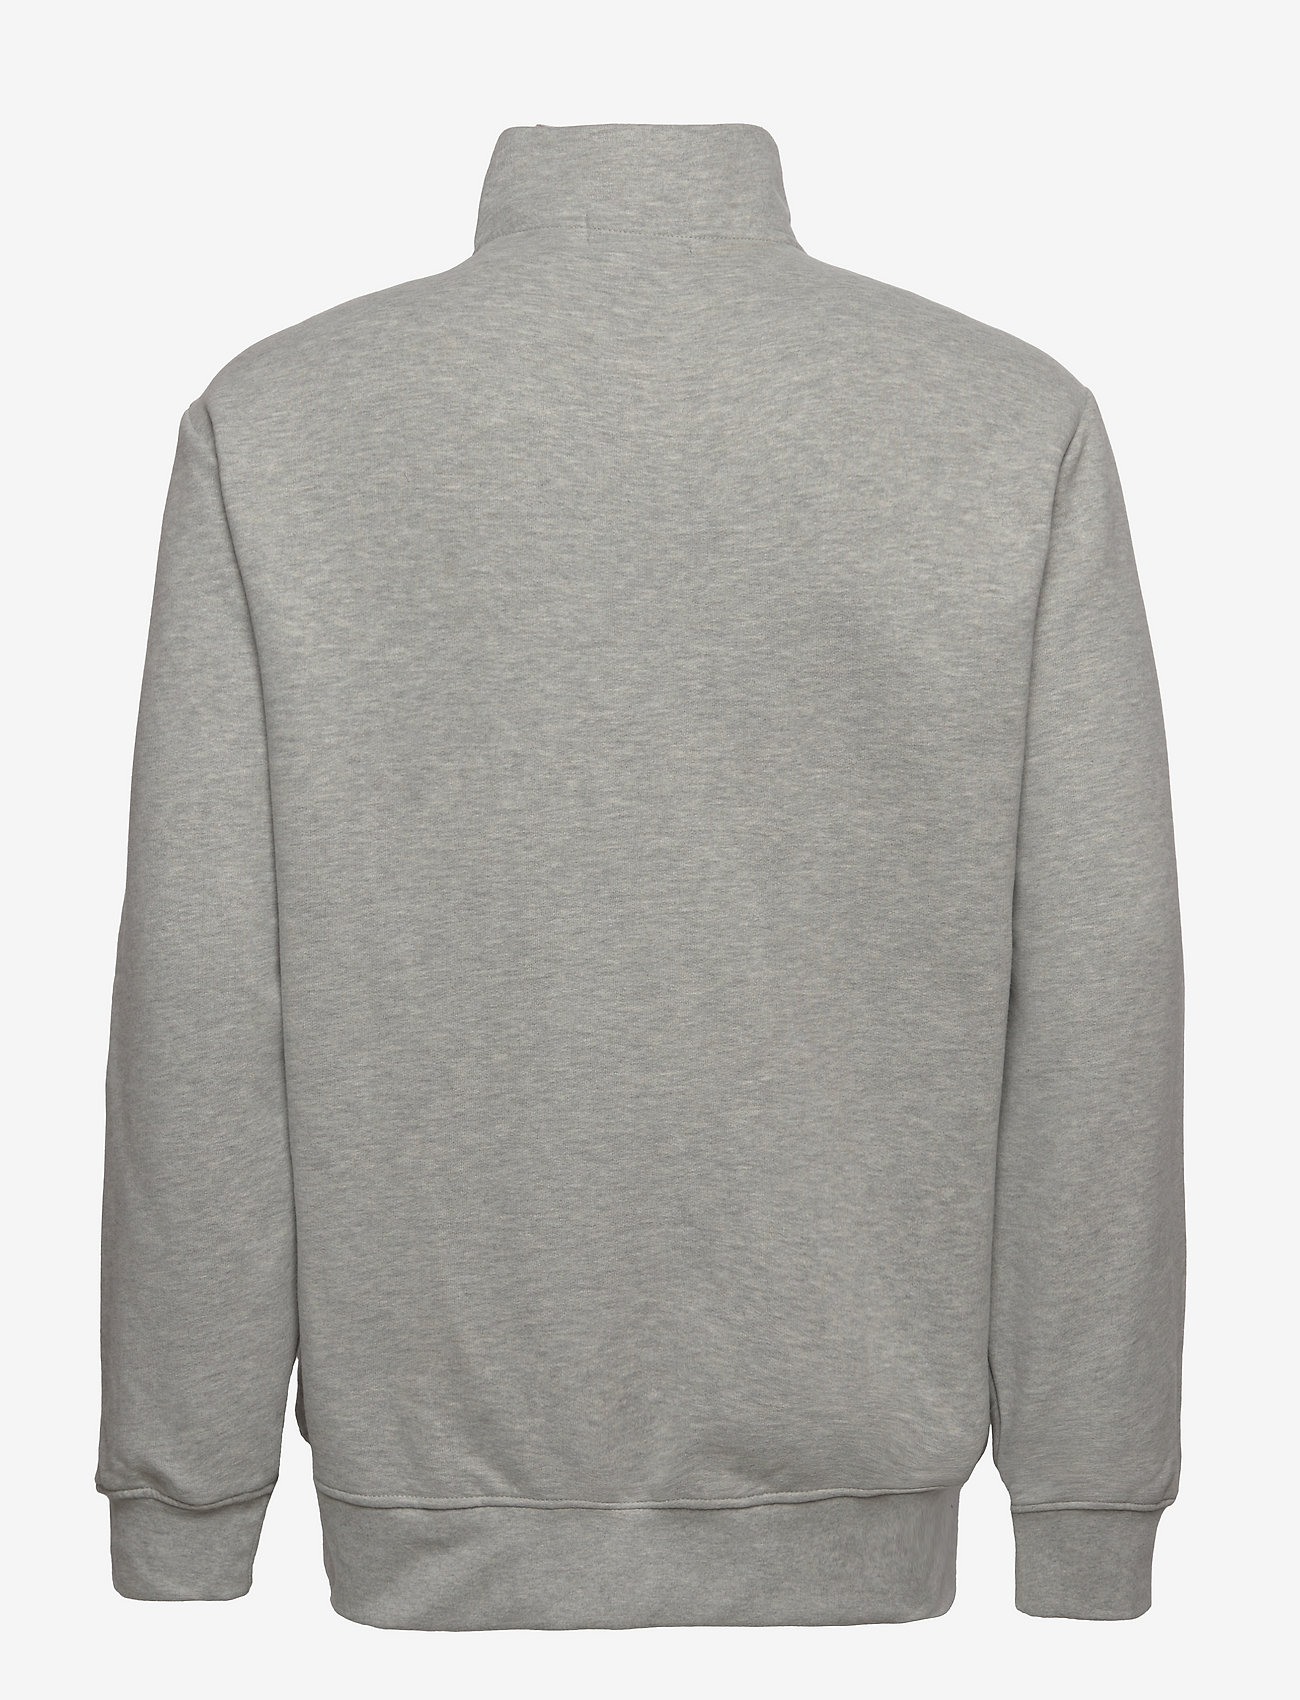 Polo Ralph Lauren - The RL Fleece Sweatshirt - andover heather - 1